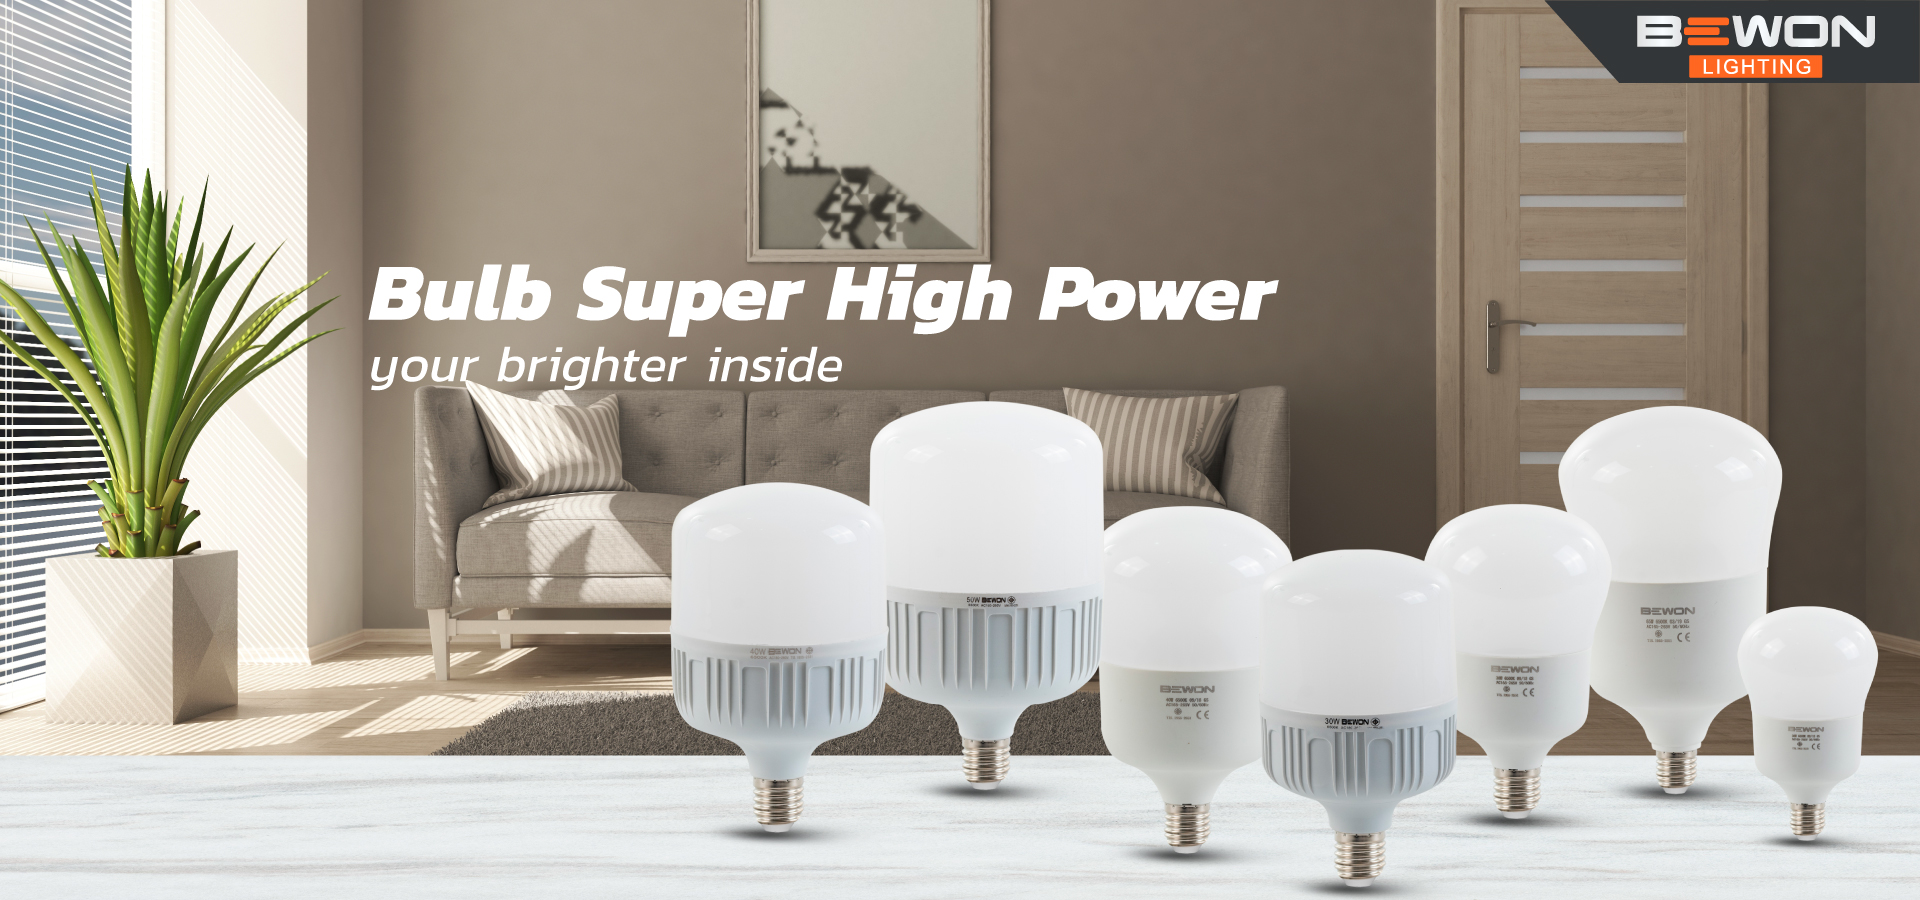 Bulb Super High Power